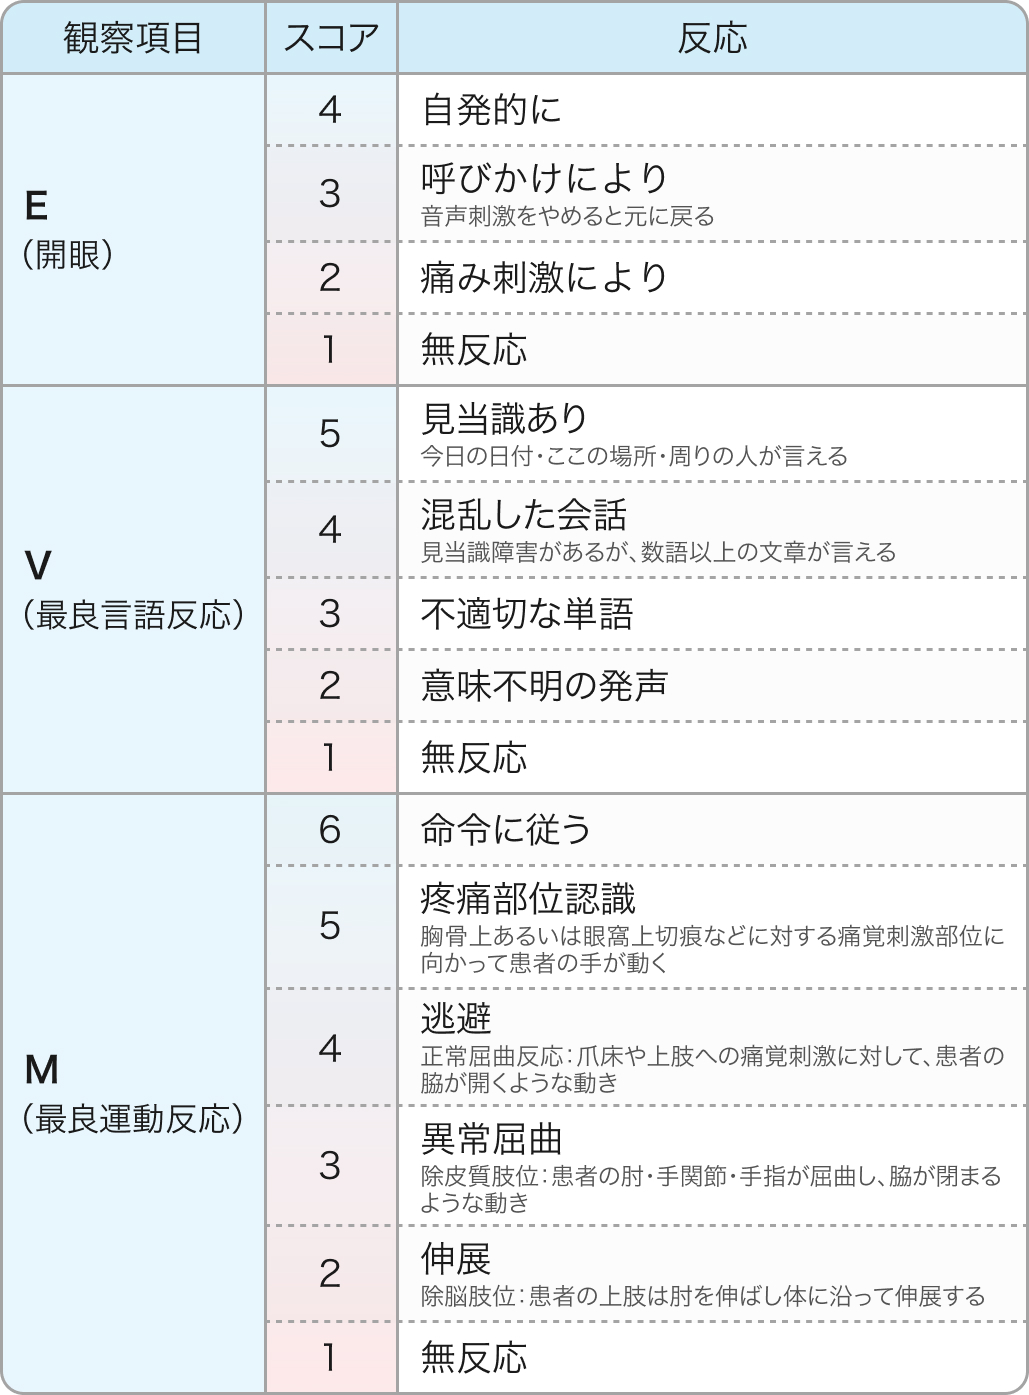 JCS (Japan Coma Scale)